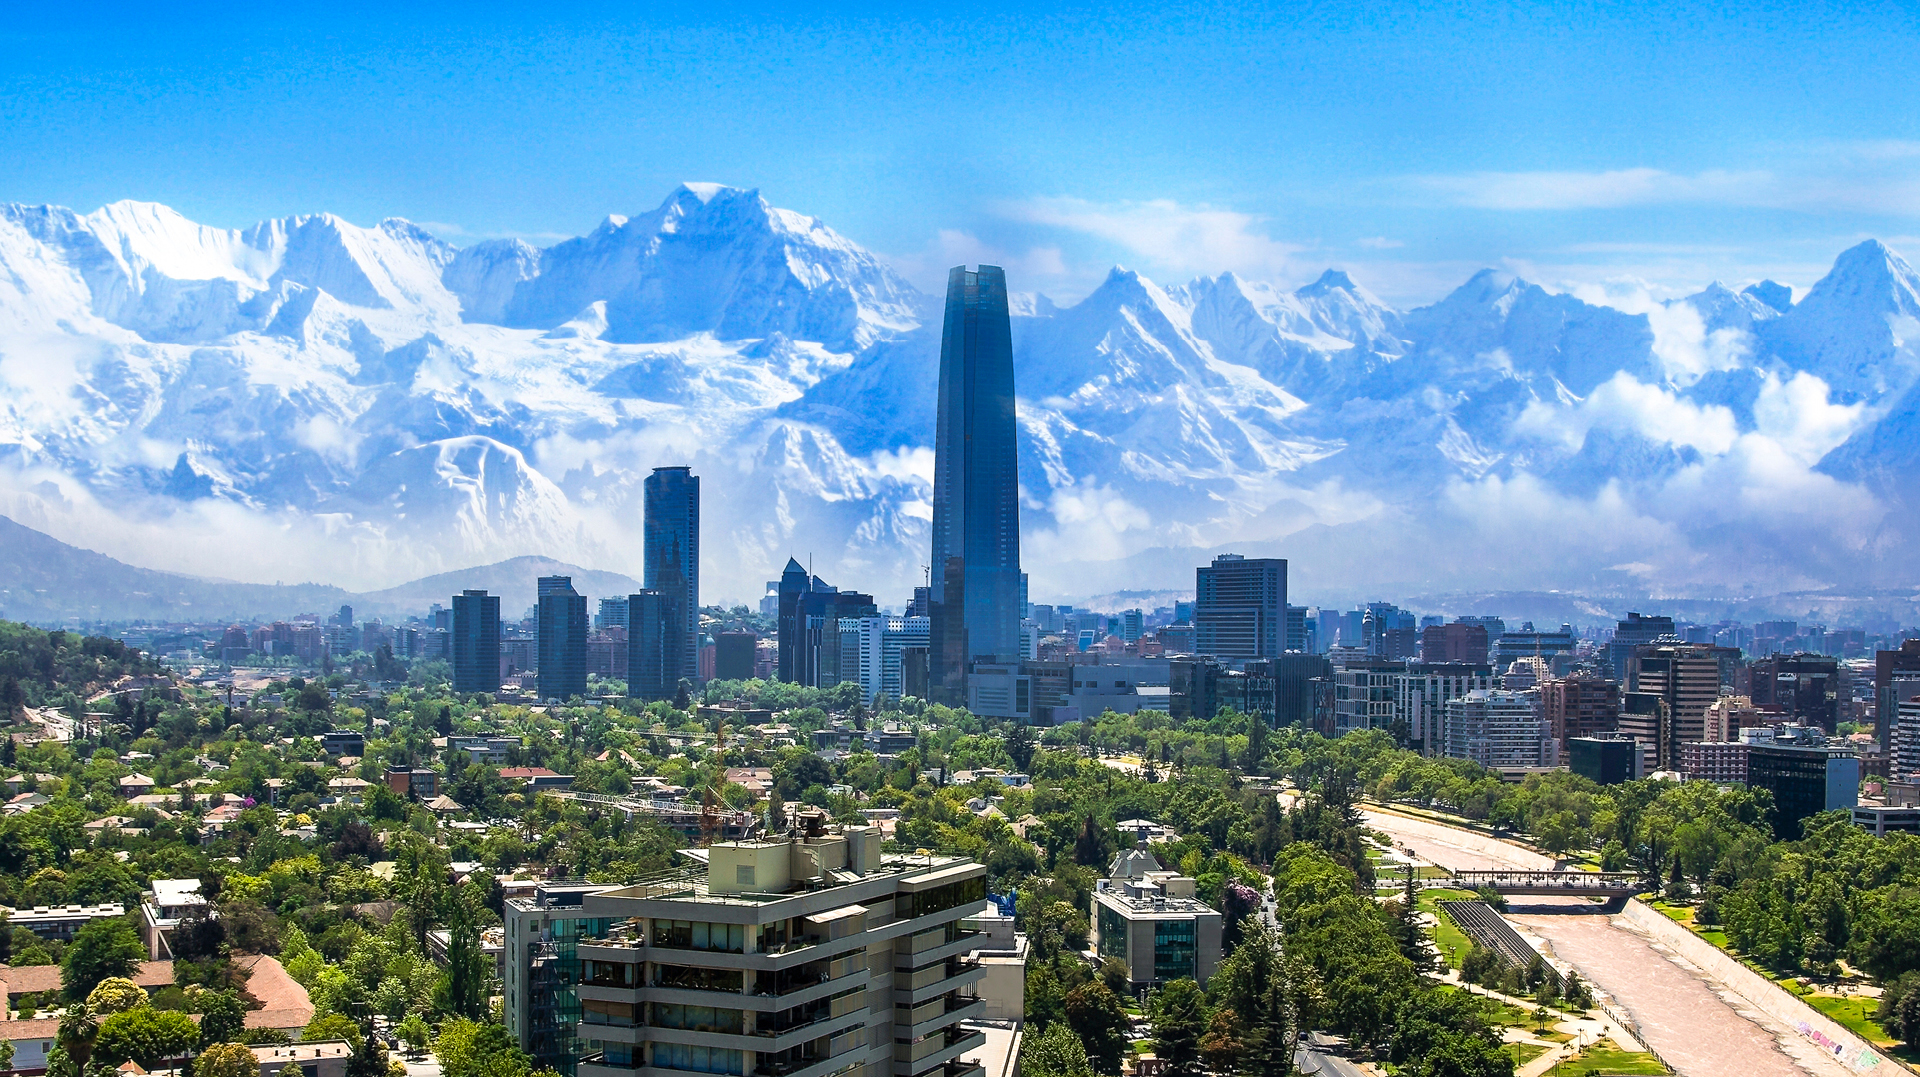 Museus, cerros e mirantes: descubra os principais pontos turísticos de Santiago do Chile